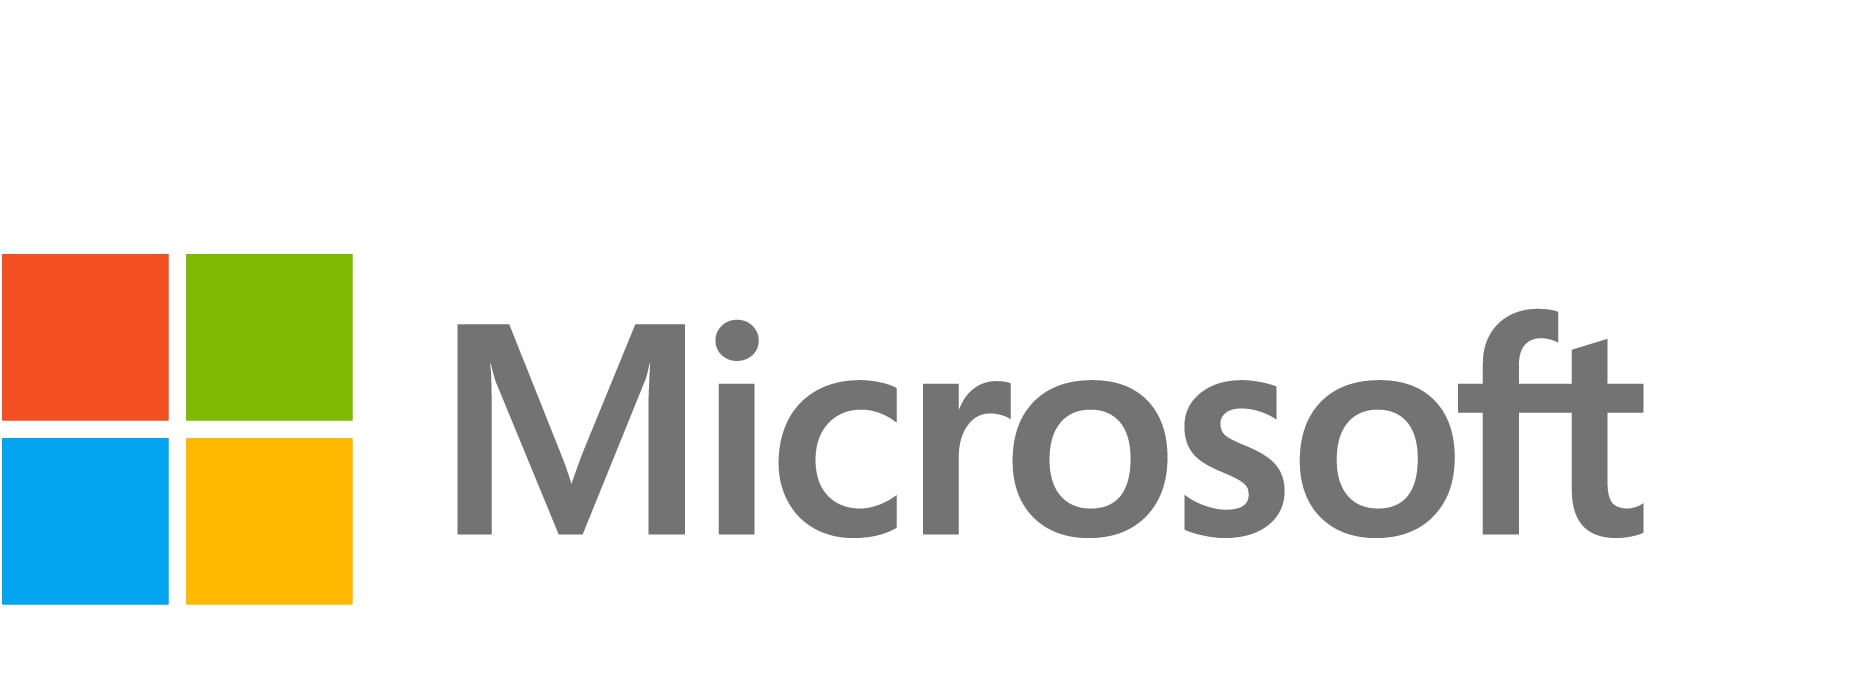 Microsoft Dynamics 365 for Operations, Enterprise edition - Sandbox Tier 3: